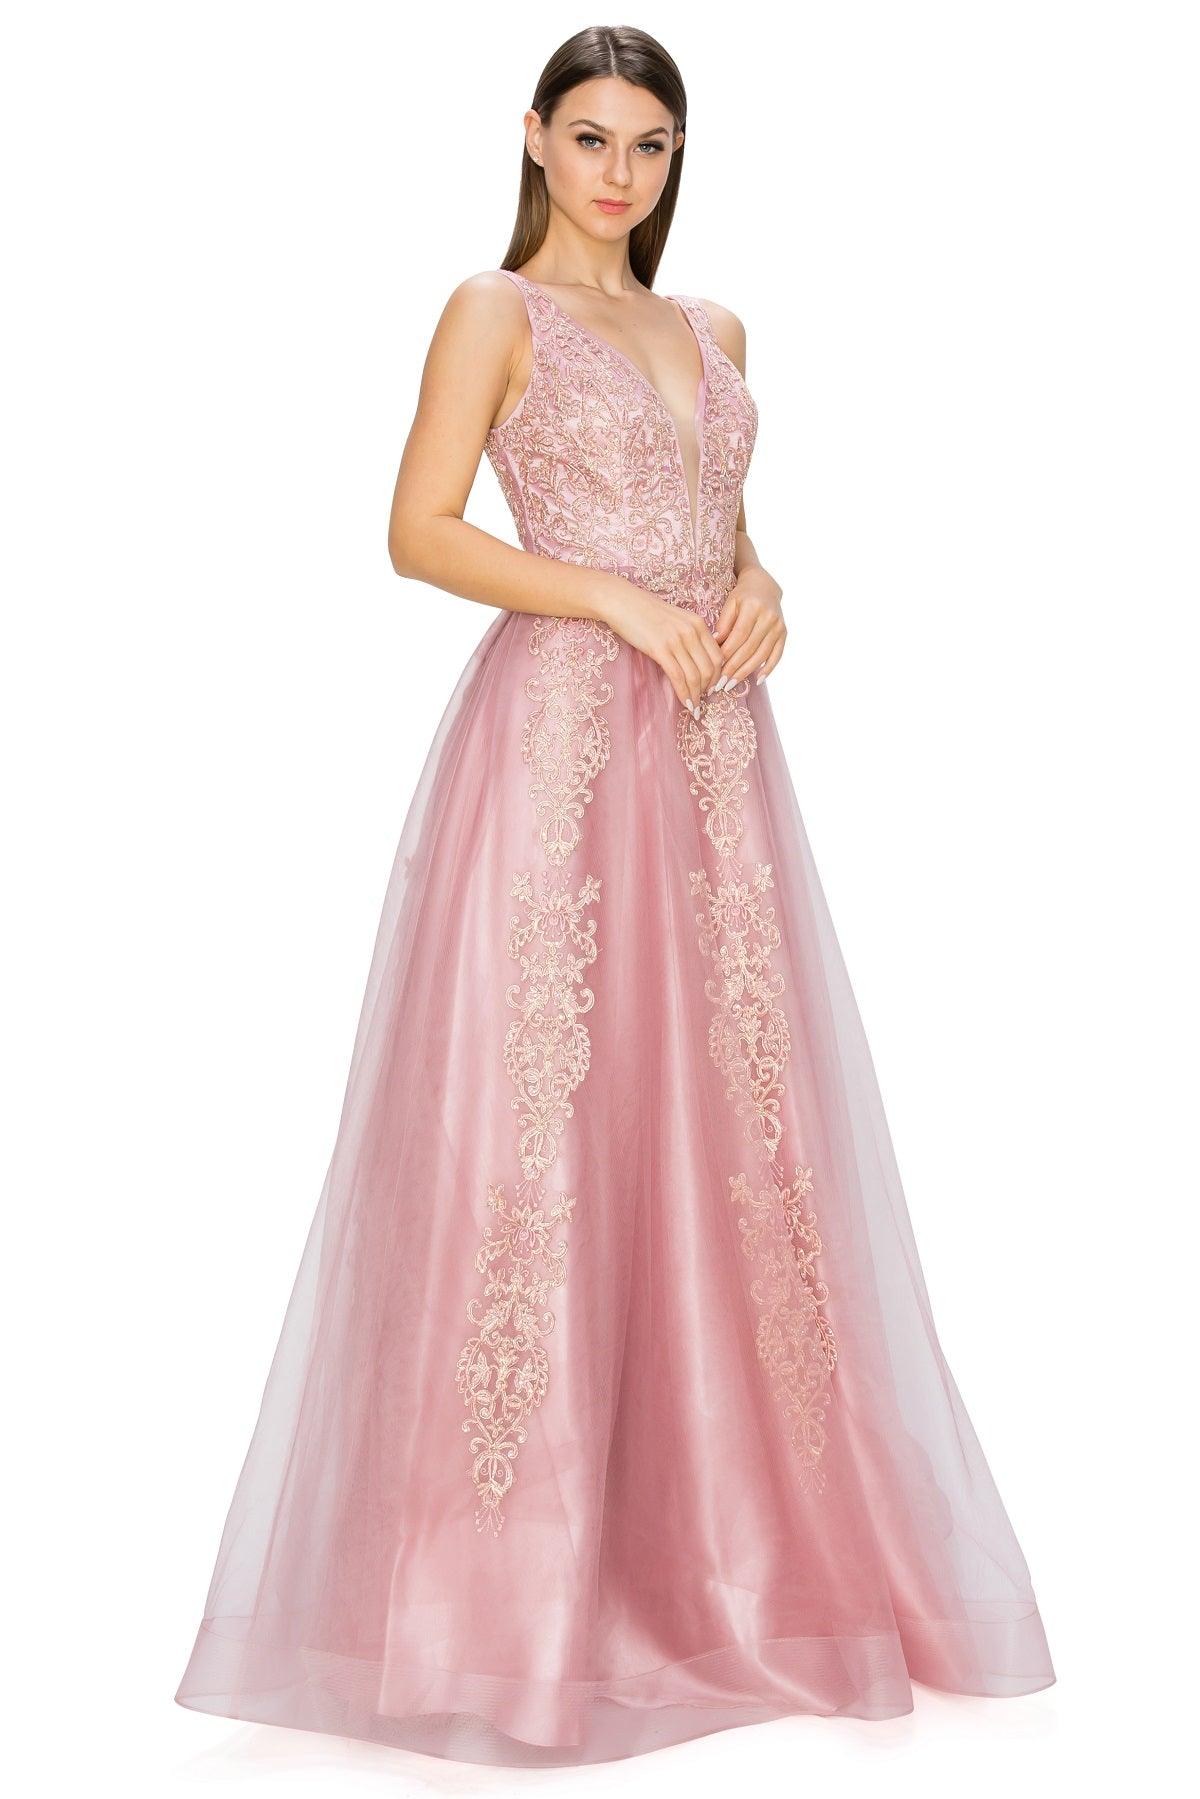 Cinderella Couture CC8029J Sleeveless Embellish Prom Dress Champagne